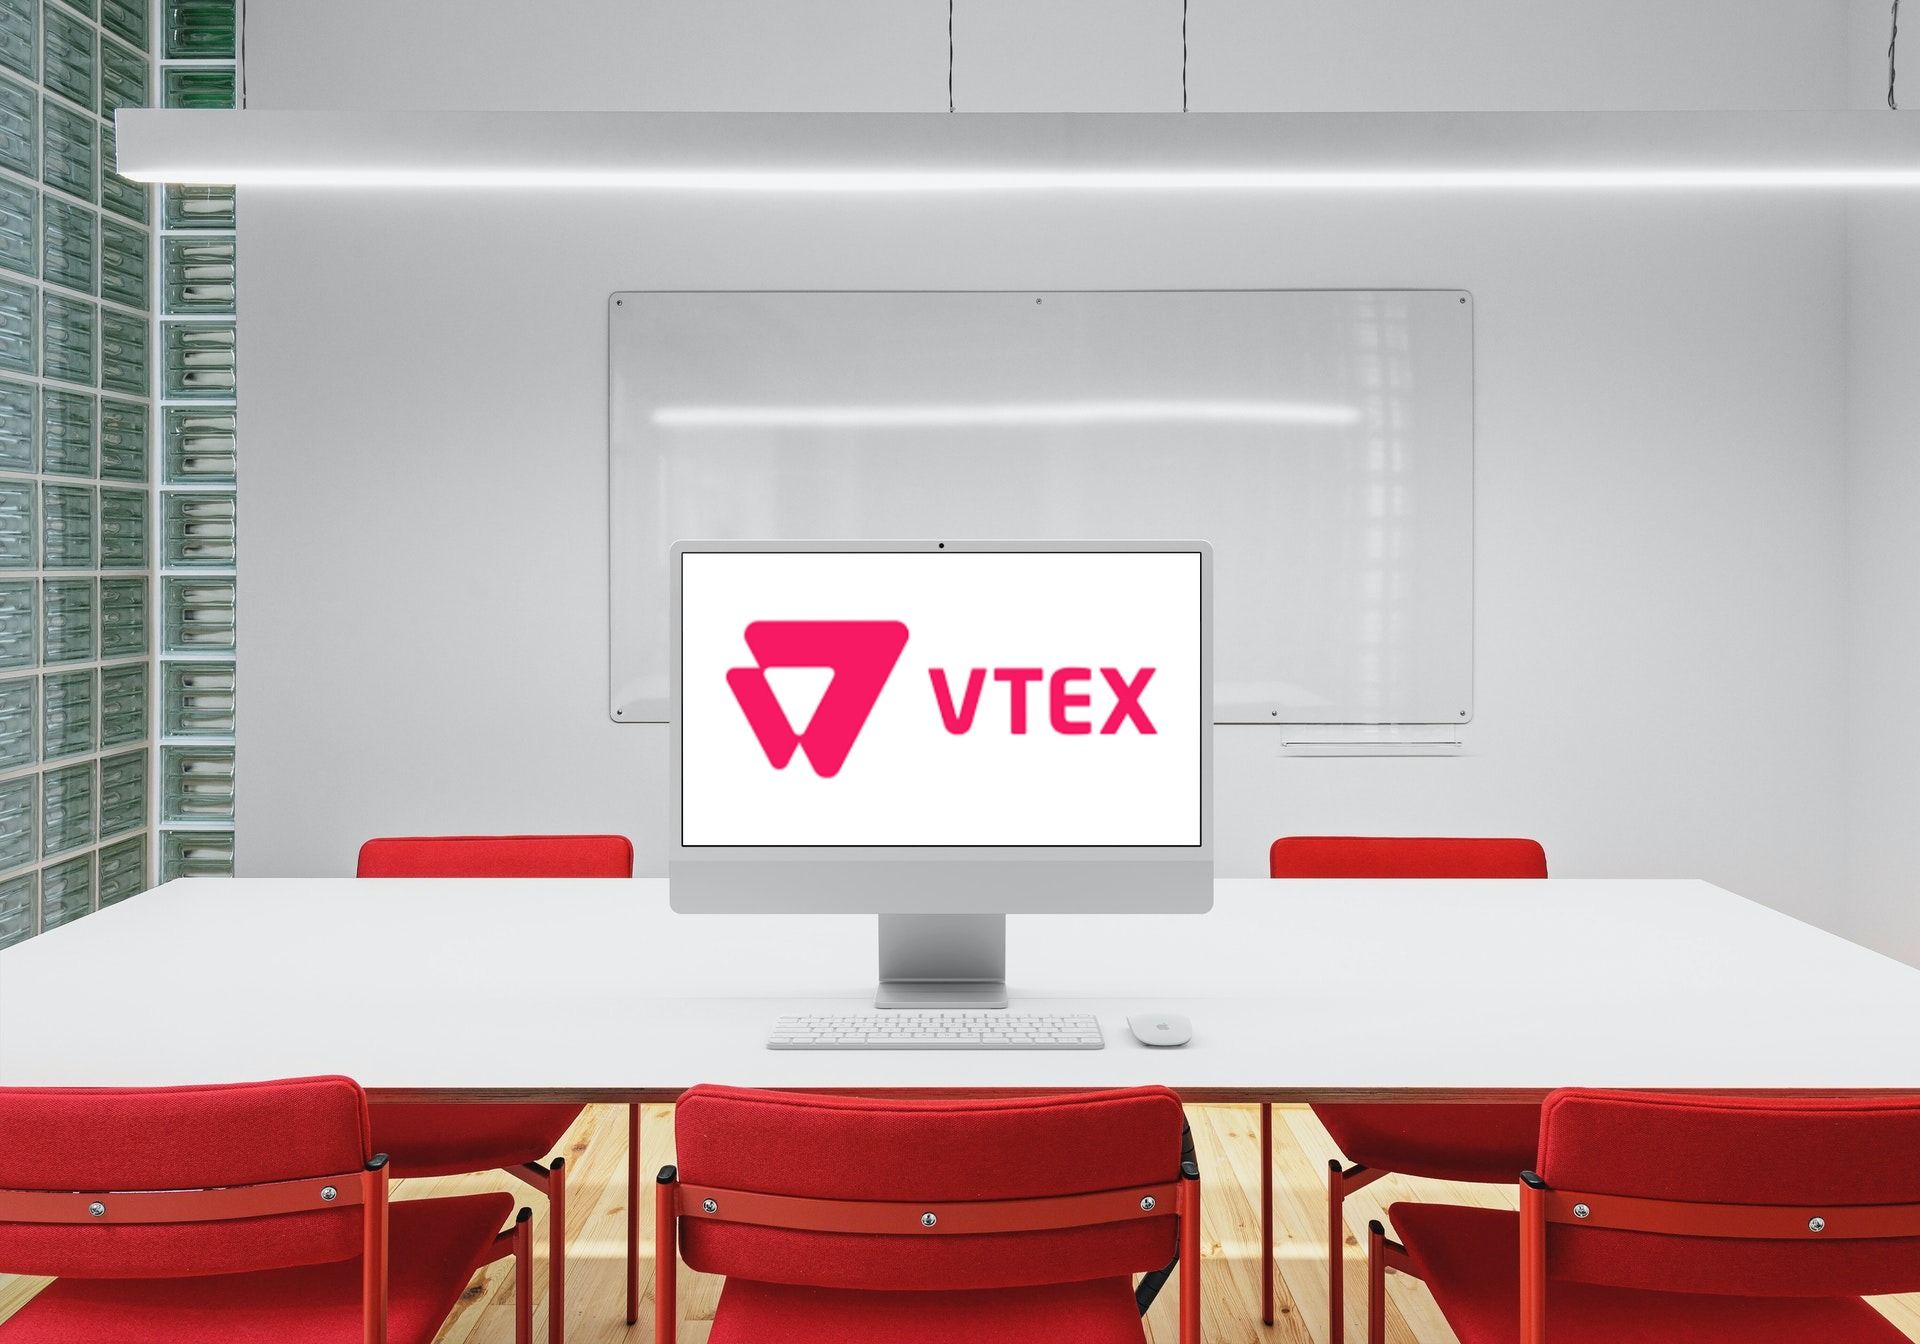 VTEX Initial Public Offering